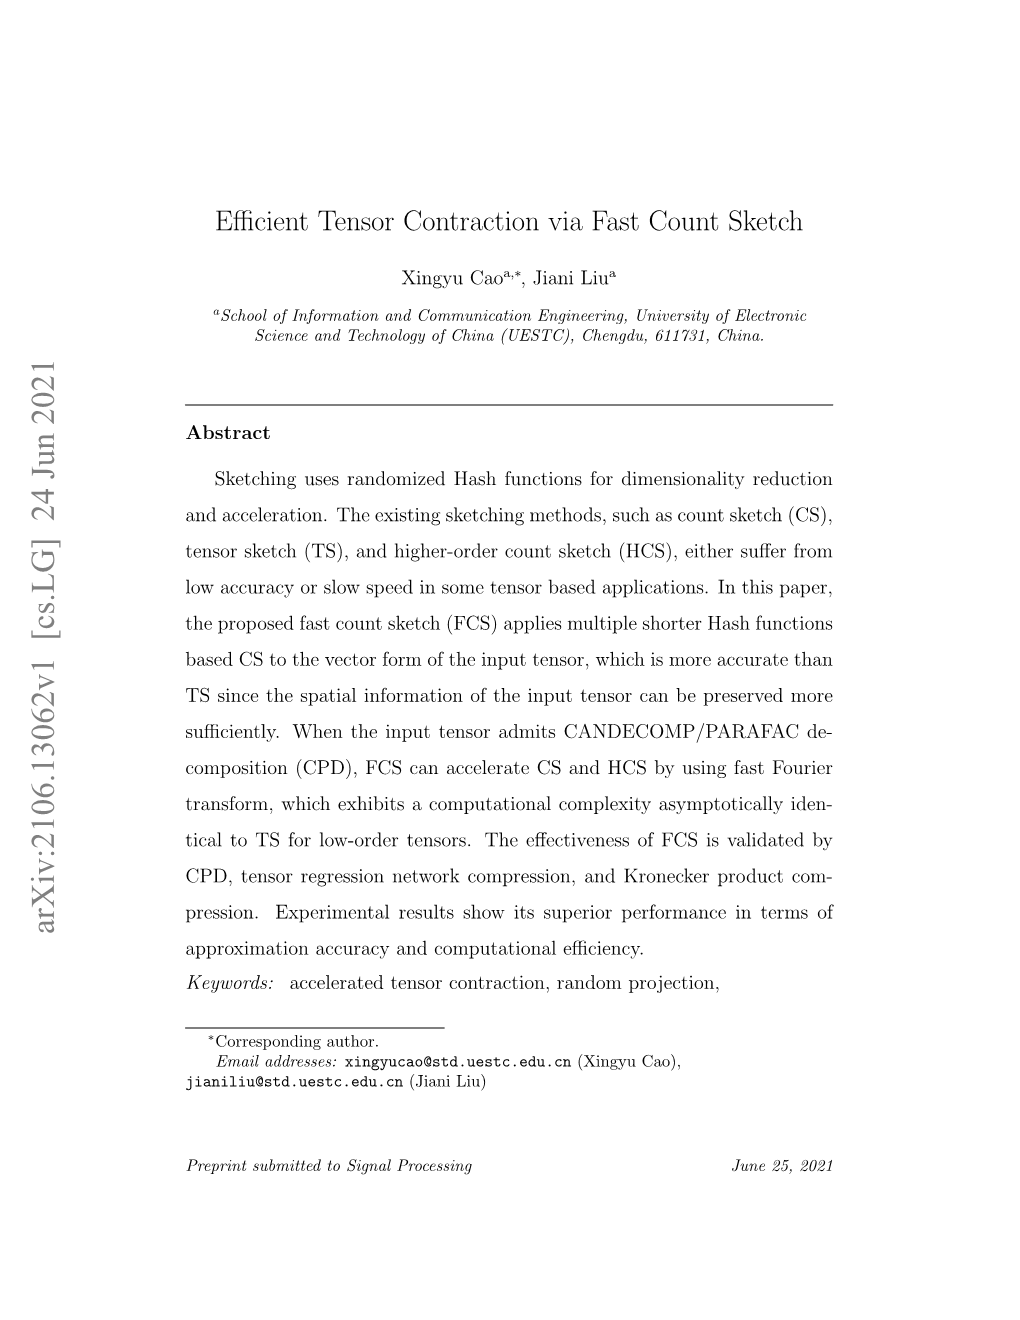 Efficient Tensor Contraction Via Fast Count Sketch